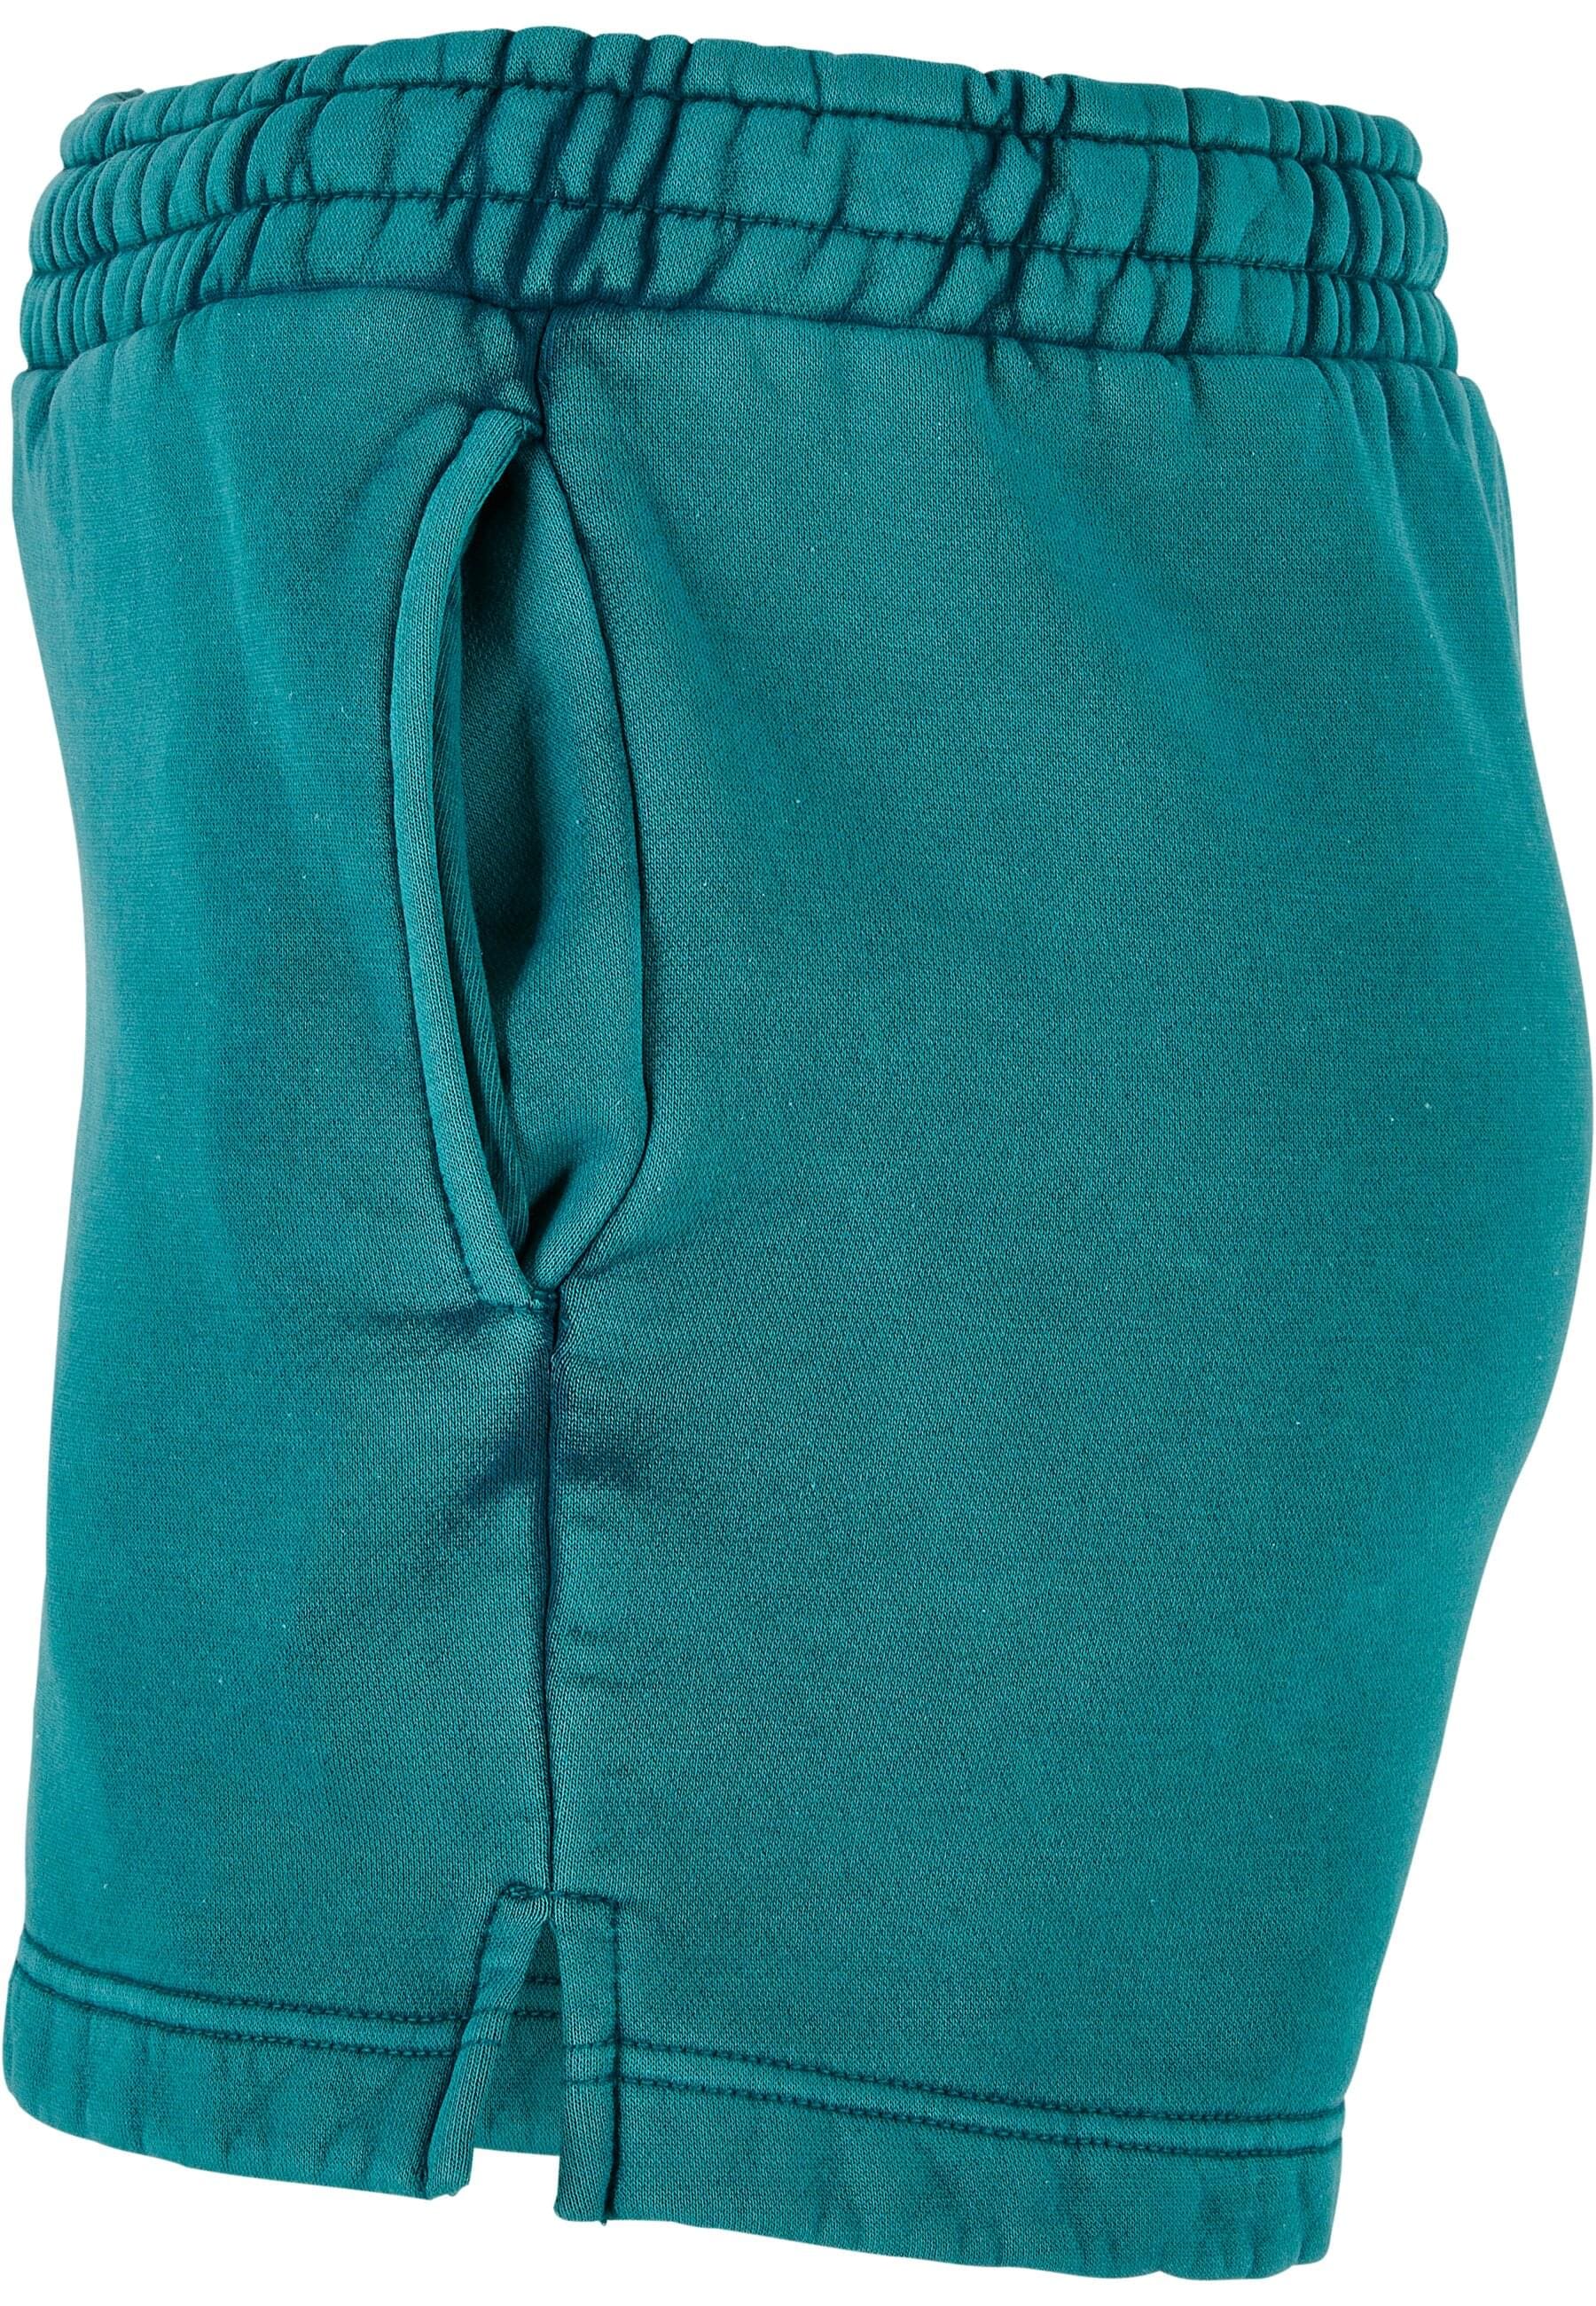 »Damen online Washed Sweatshorts CLASSICS URBAN walking kaufen (1 Stone tlg.) | I\'m Ladies Shorts«,